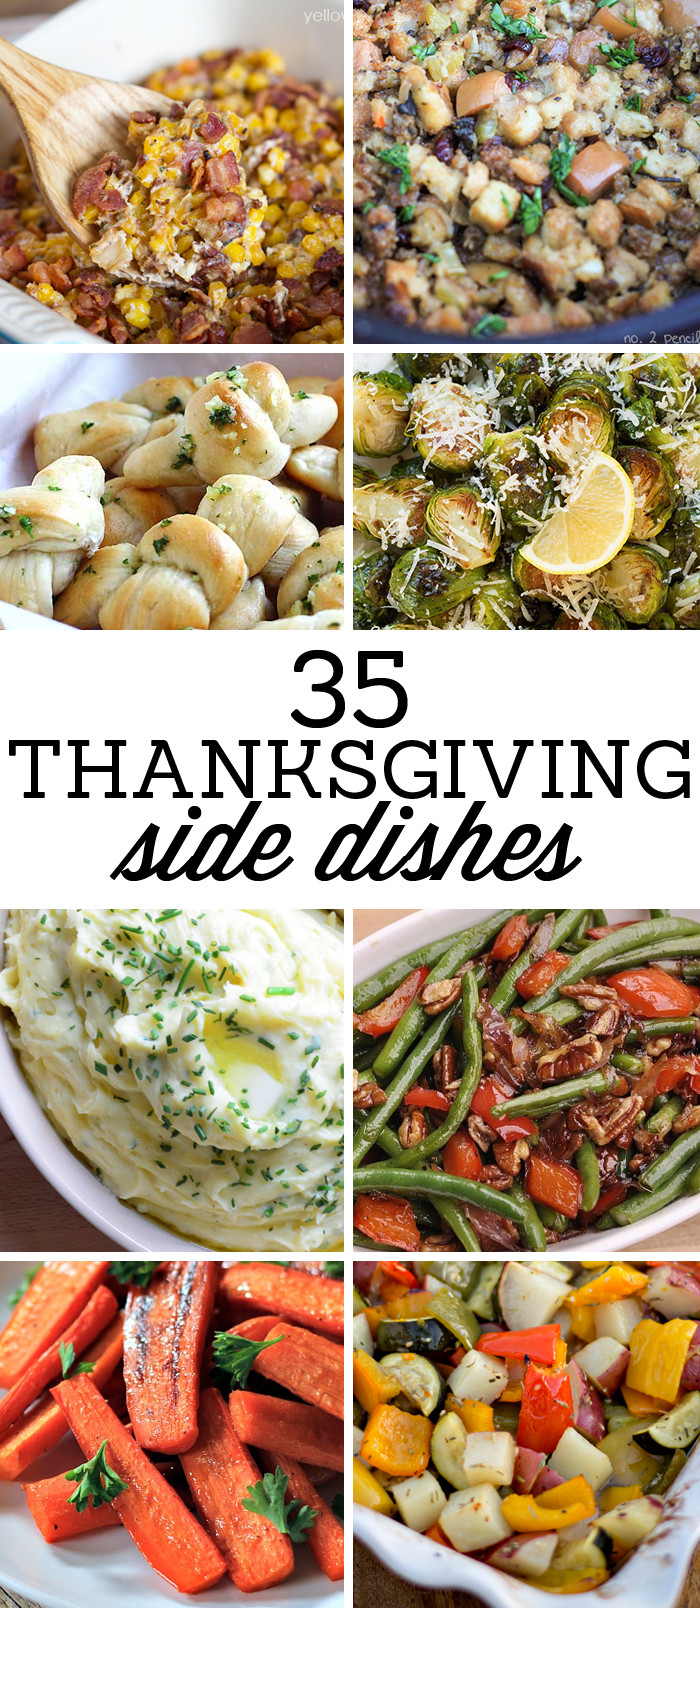 Side Dishes For Christmas
 35 Side Dishes for Christmas Dinner Yellow Bliss Road